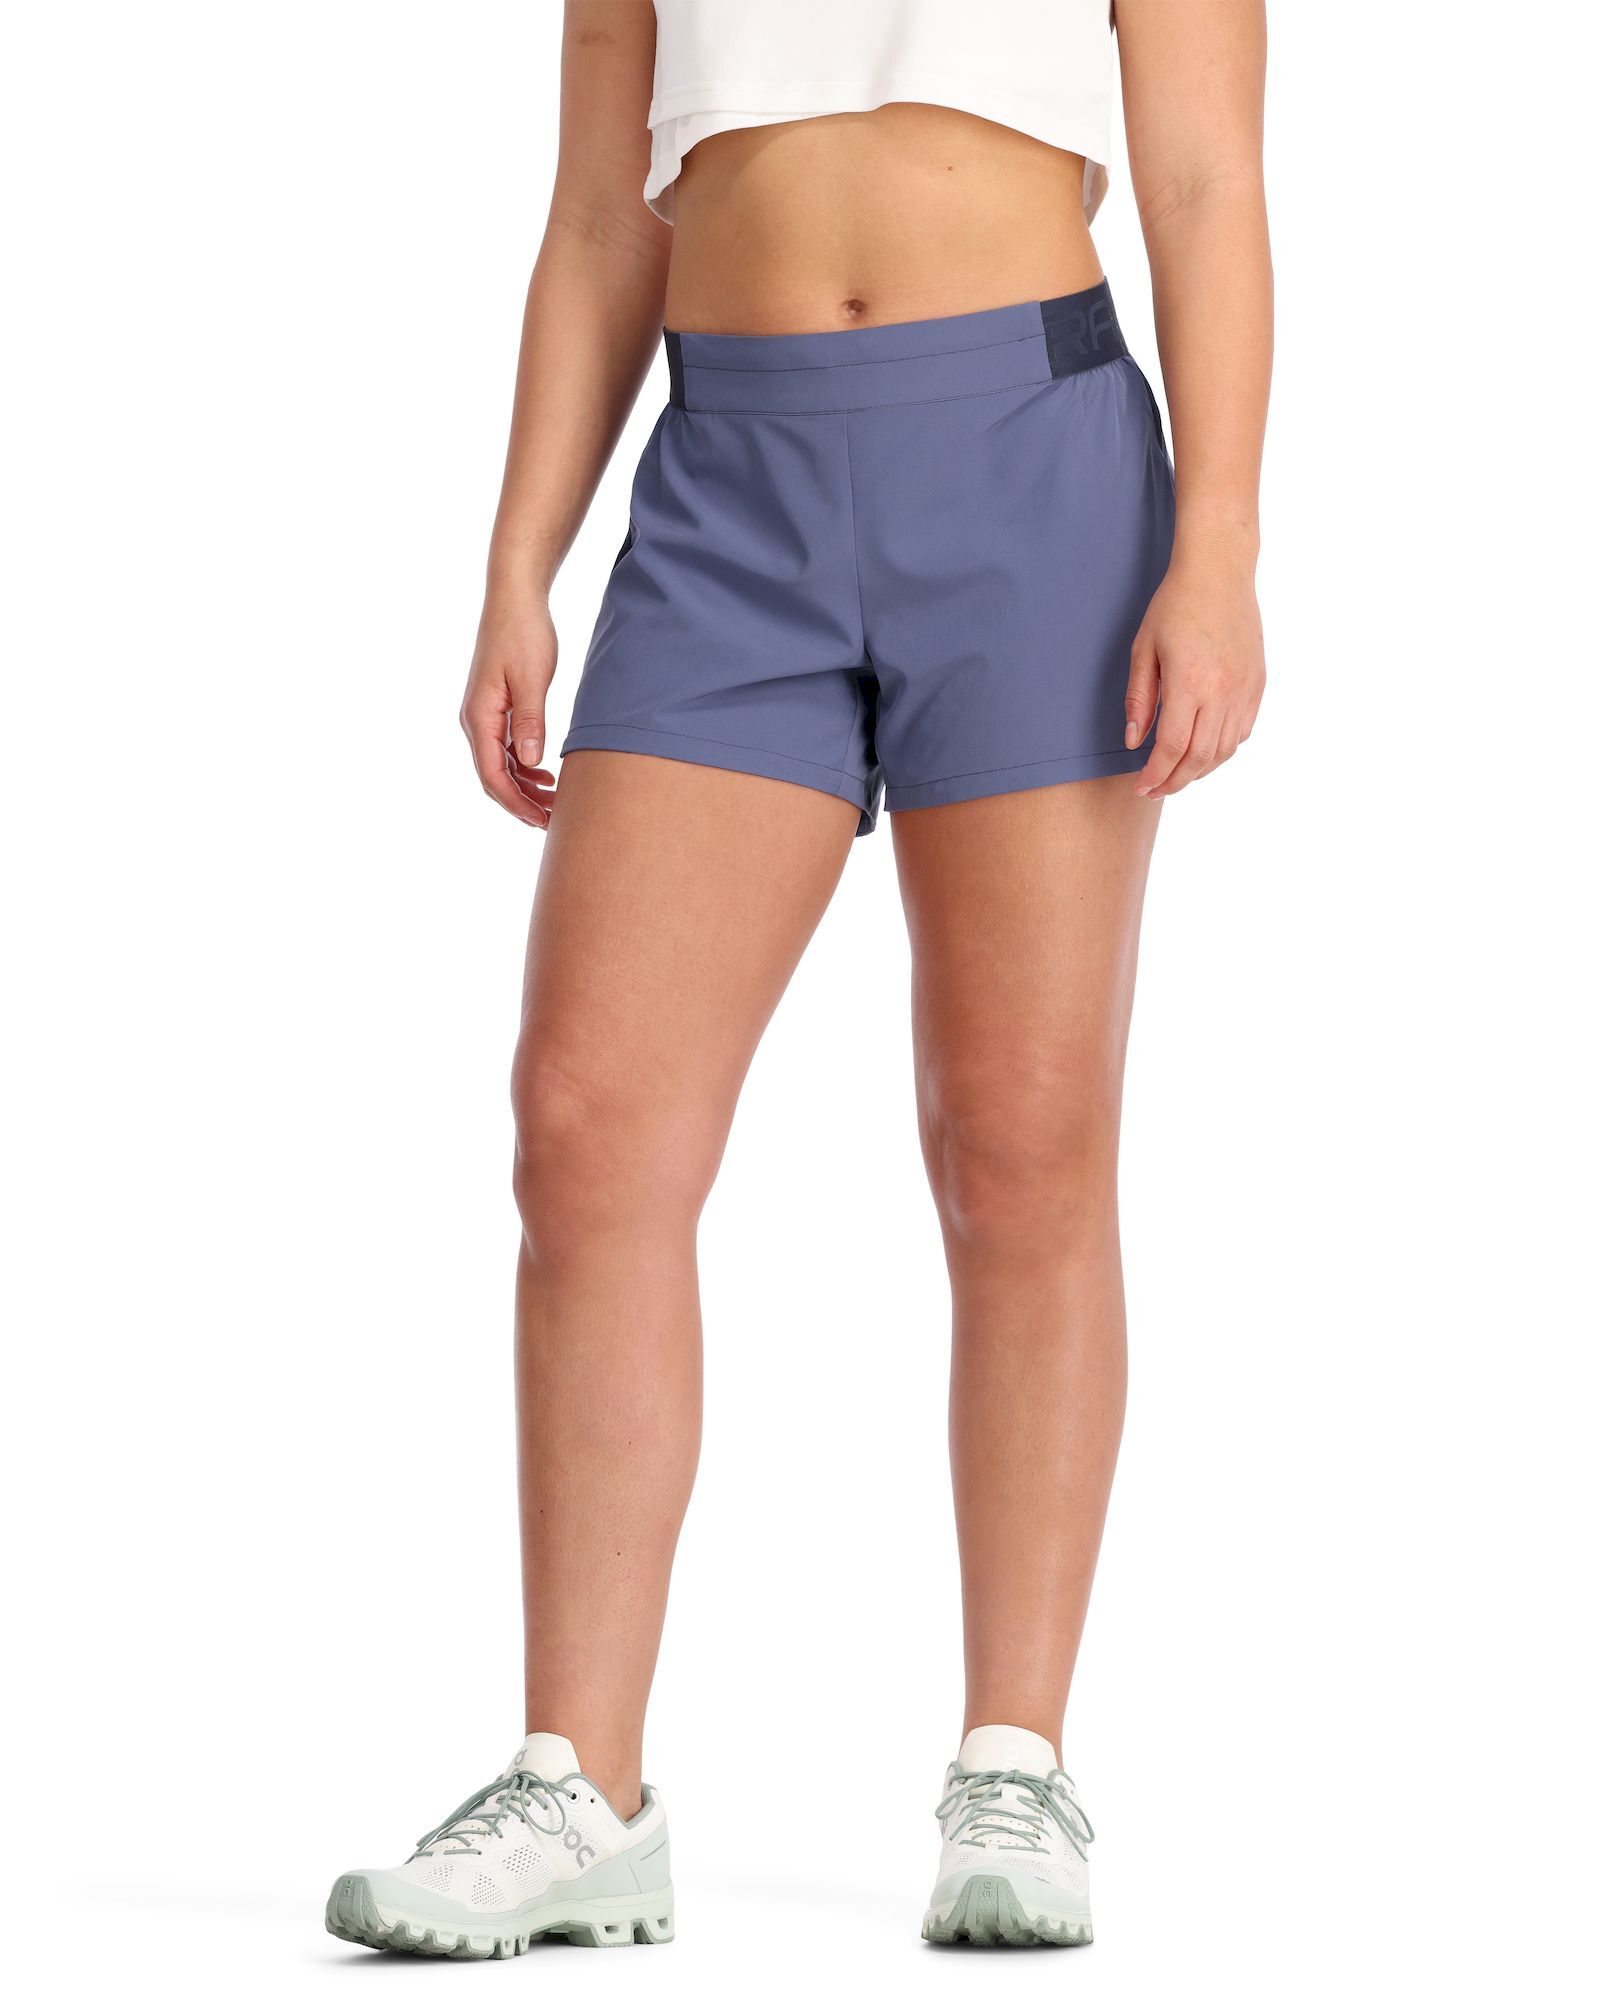 Kari Traa Nora 2.0 Shorts 4 inch - Trail running shorts - Women's | Hardloop